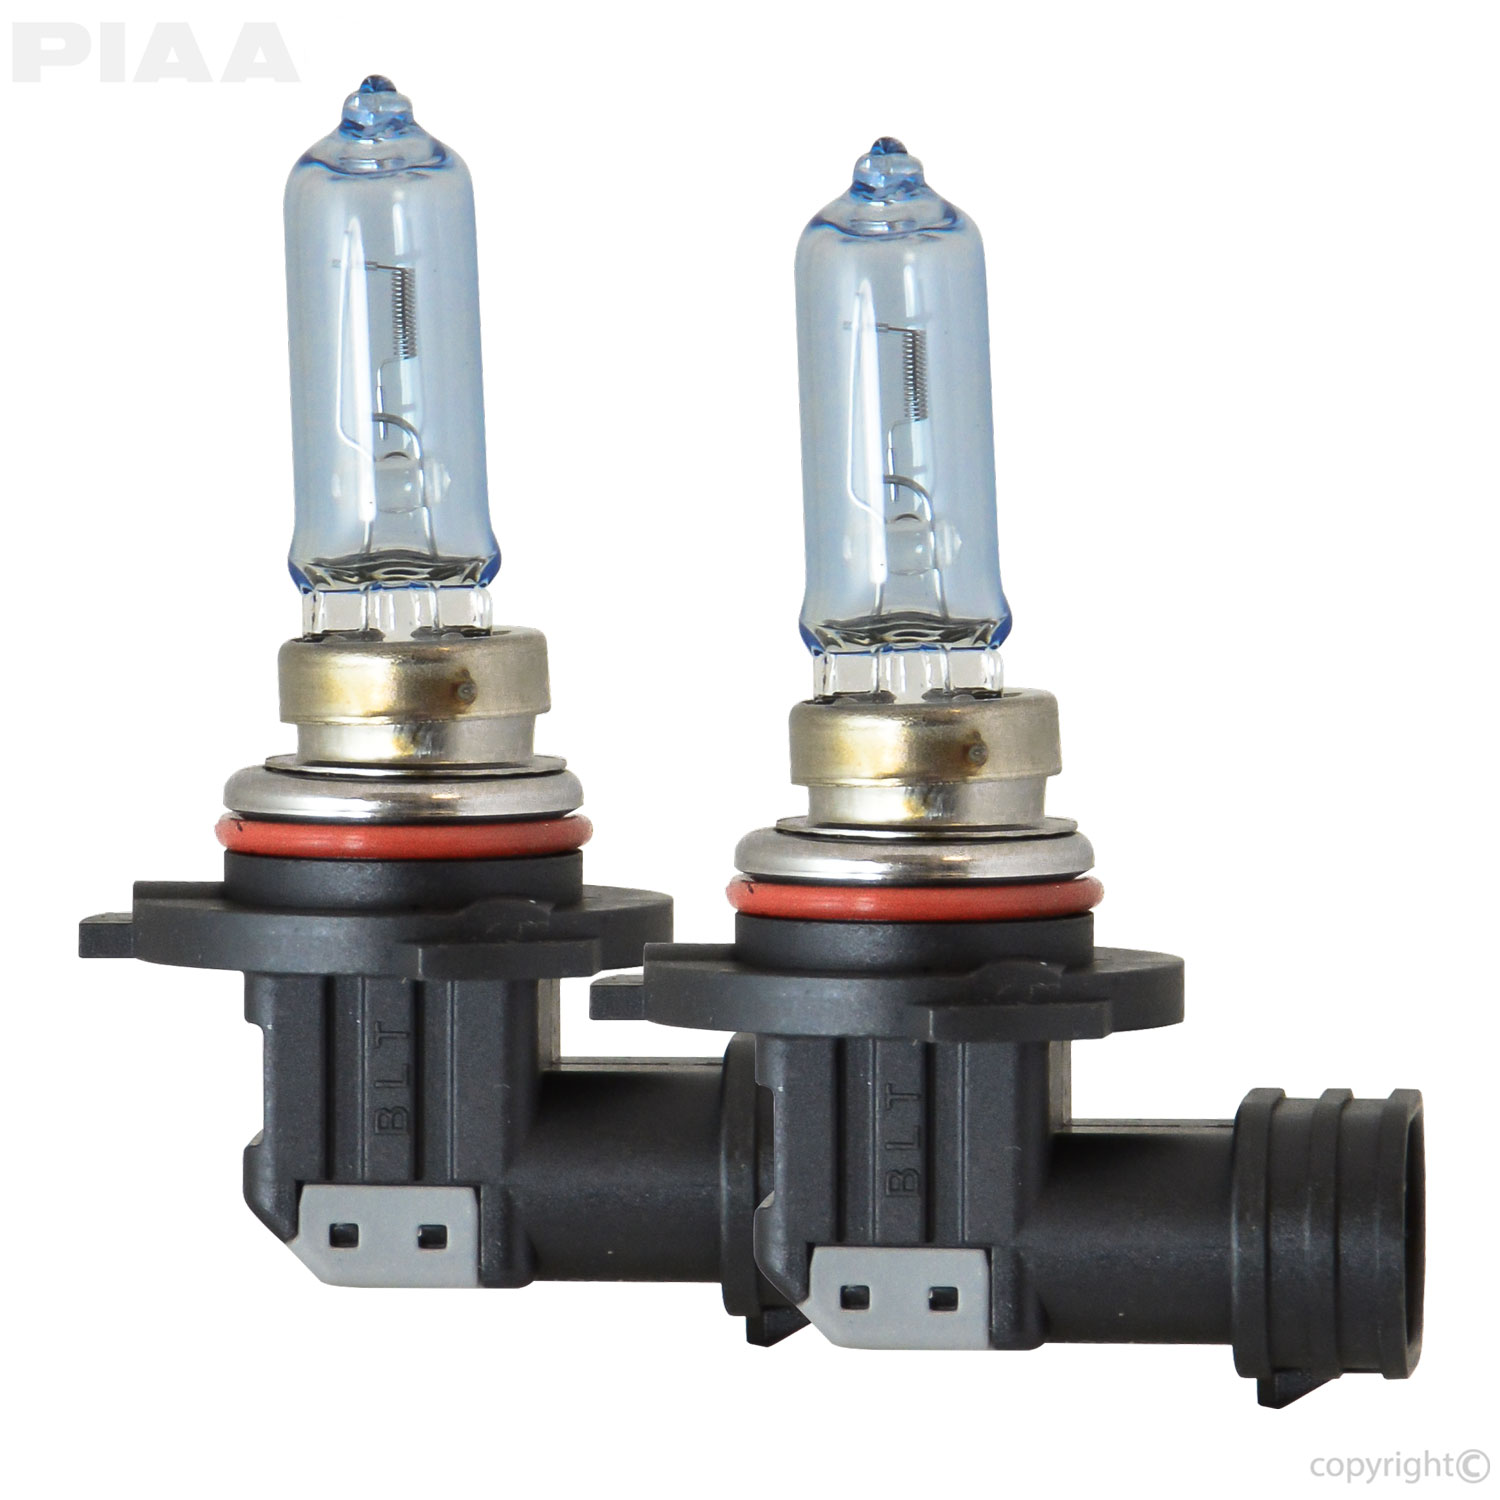 PIAA  H9 High Output LED Bulbs 6000k Twin Pack #17202 - H9